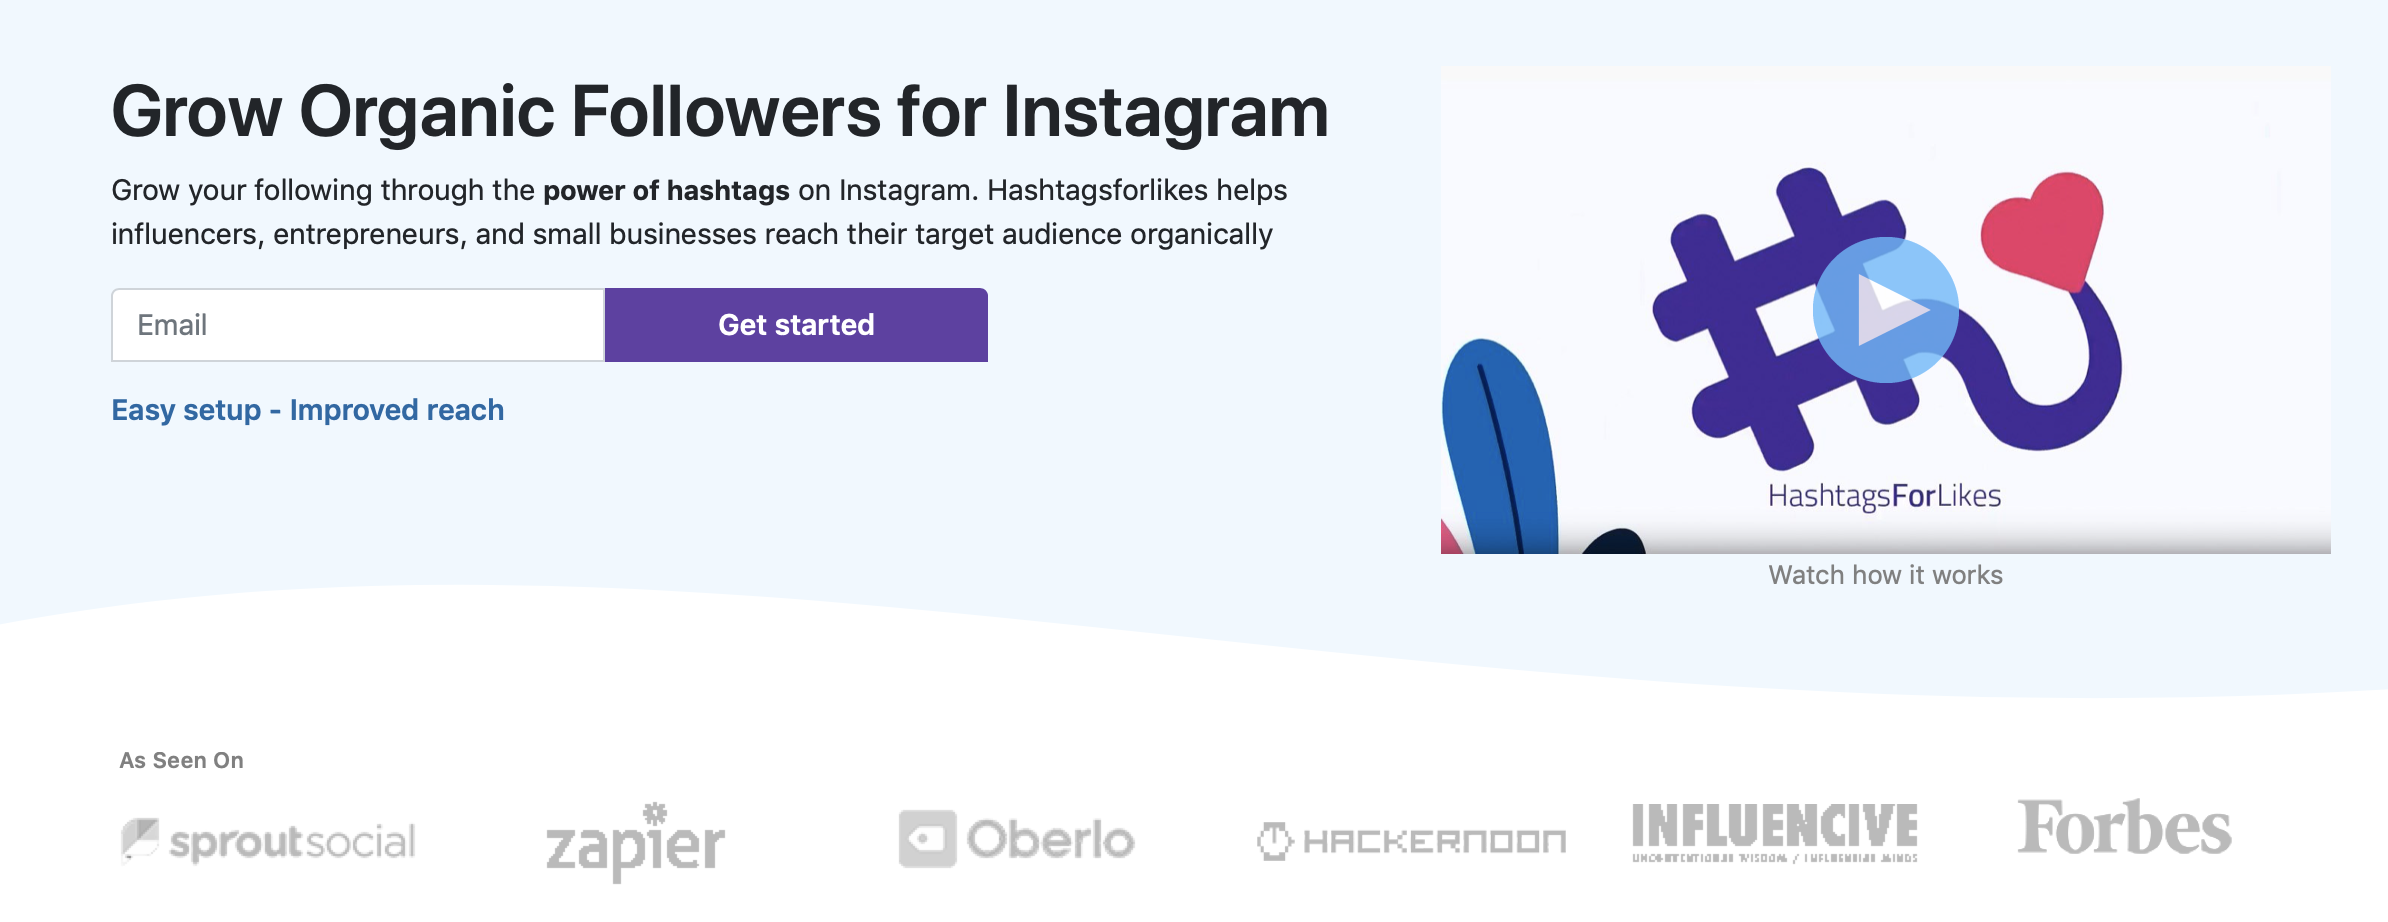 best instagram to grow organic followers. thinkmaverick